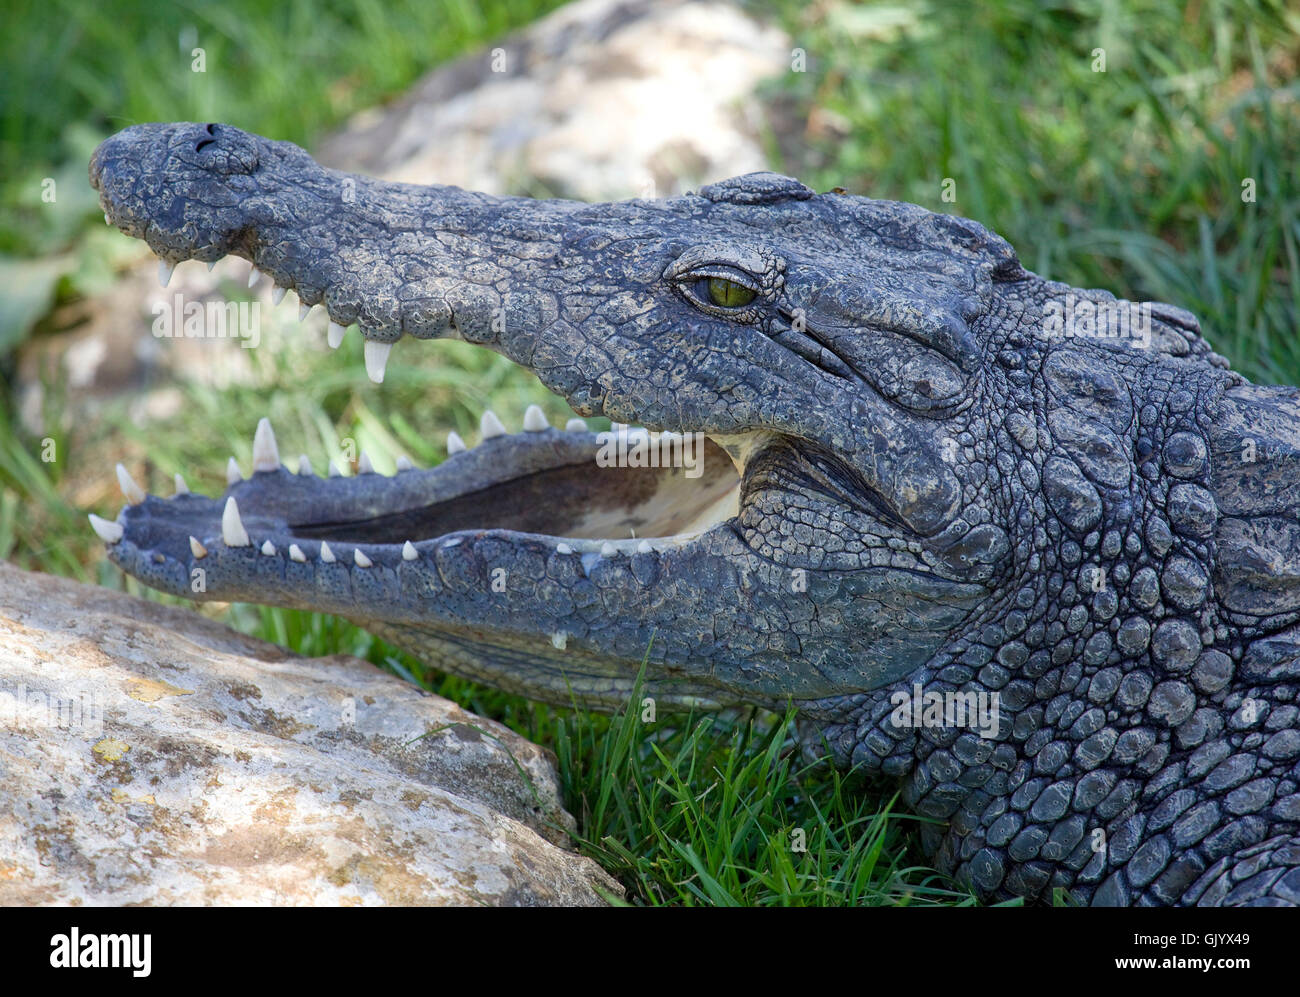 Caiman alligatorid crocodilian Stock Photo